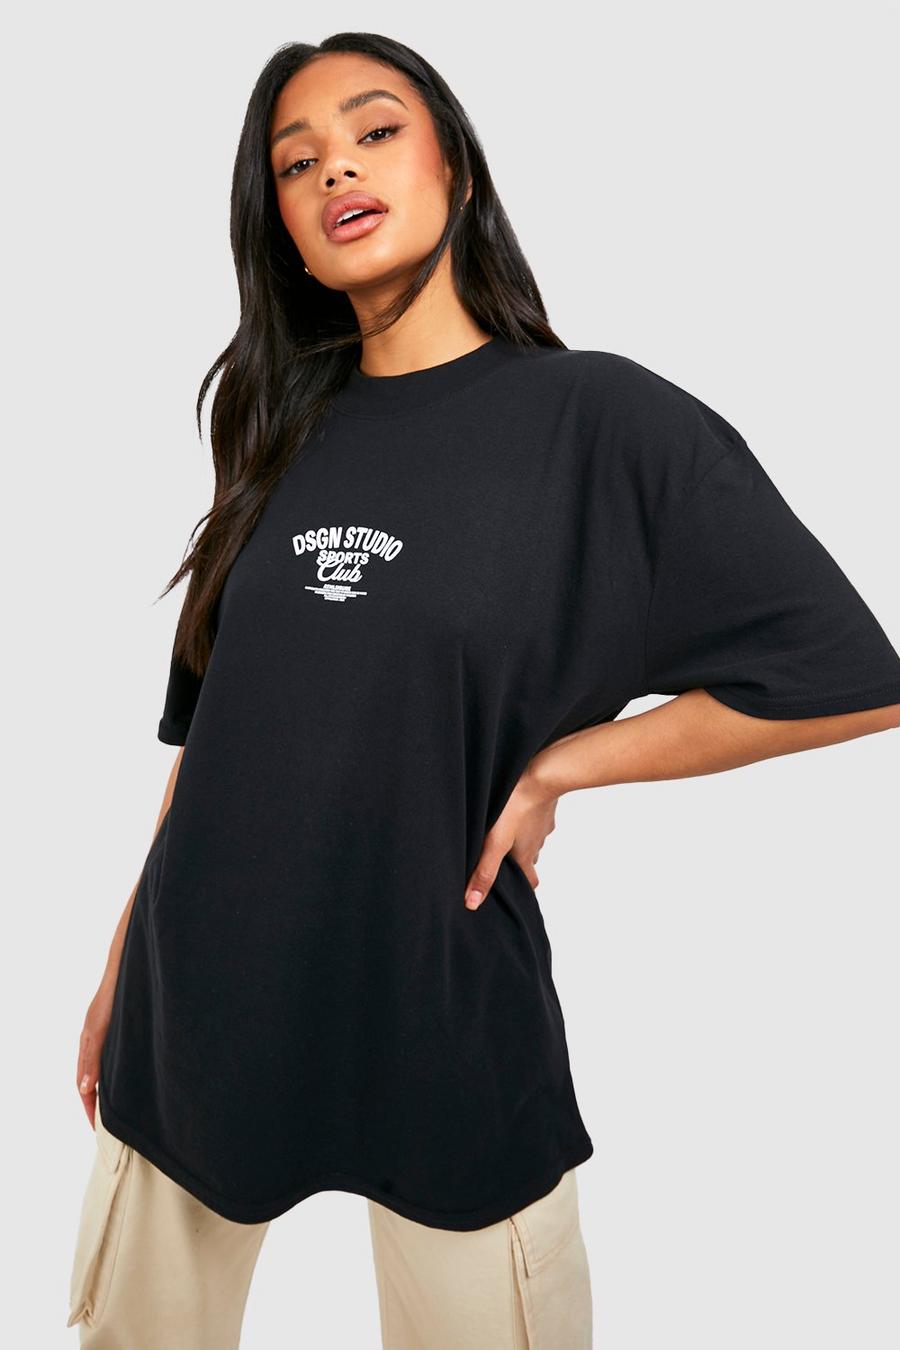 Black Dsgn Studio Sports Club Slogan Oversized T-shirt  image number 1